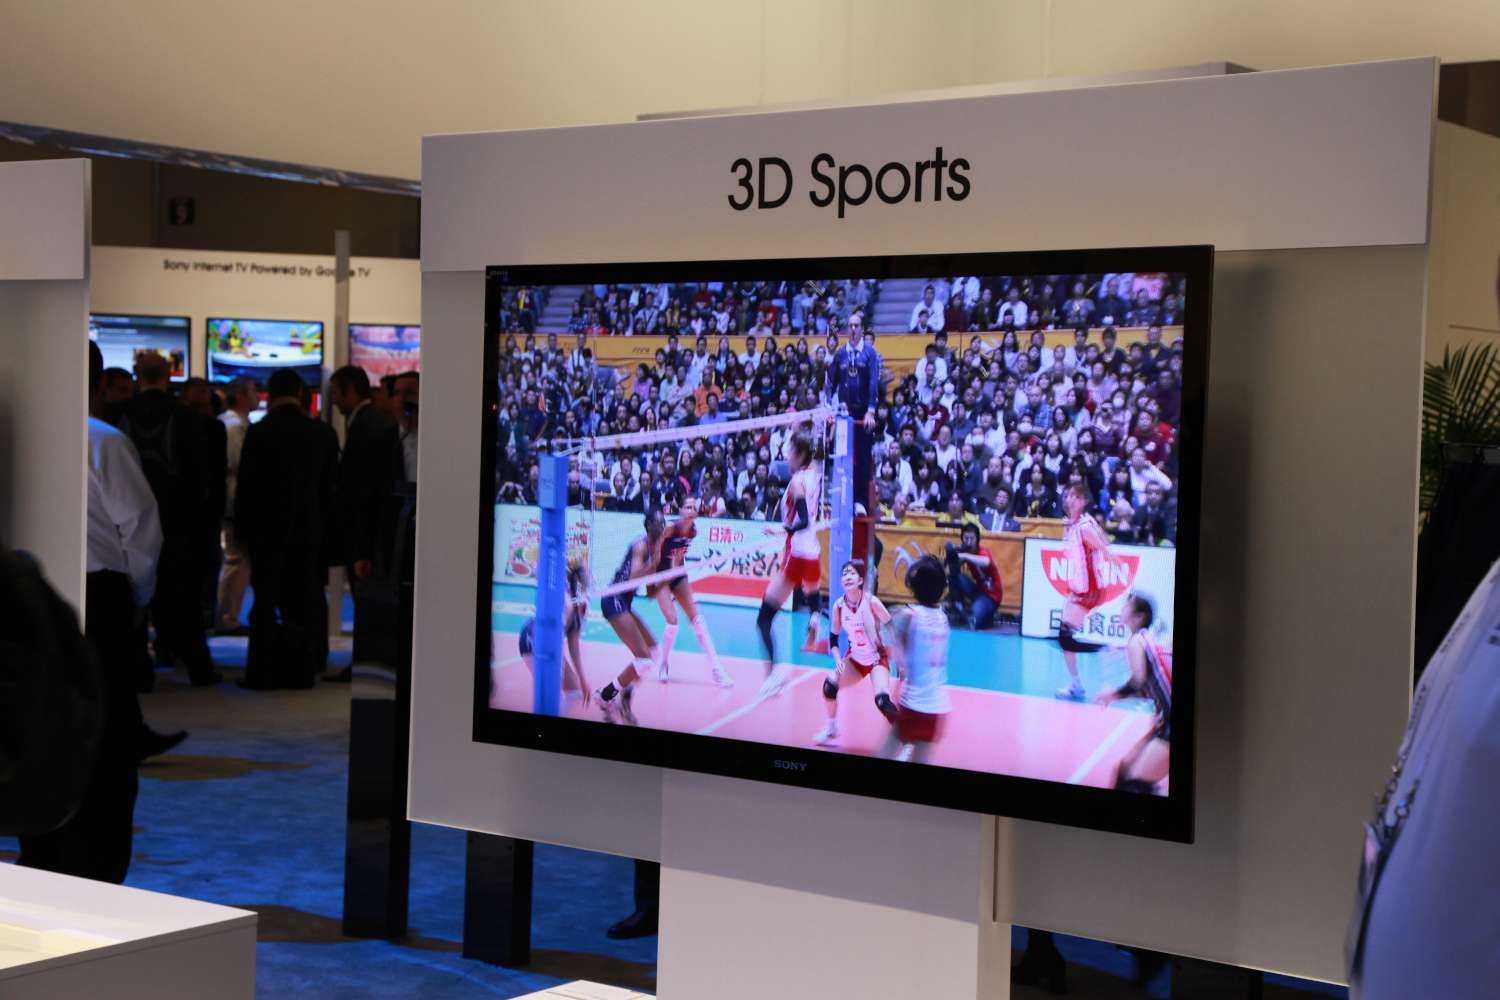 3DTV exibindo esportes no estande da CES